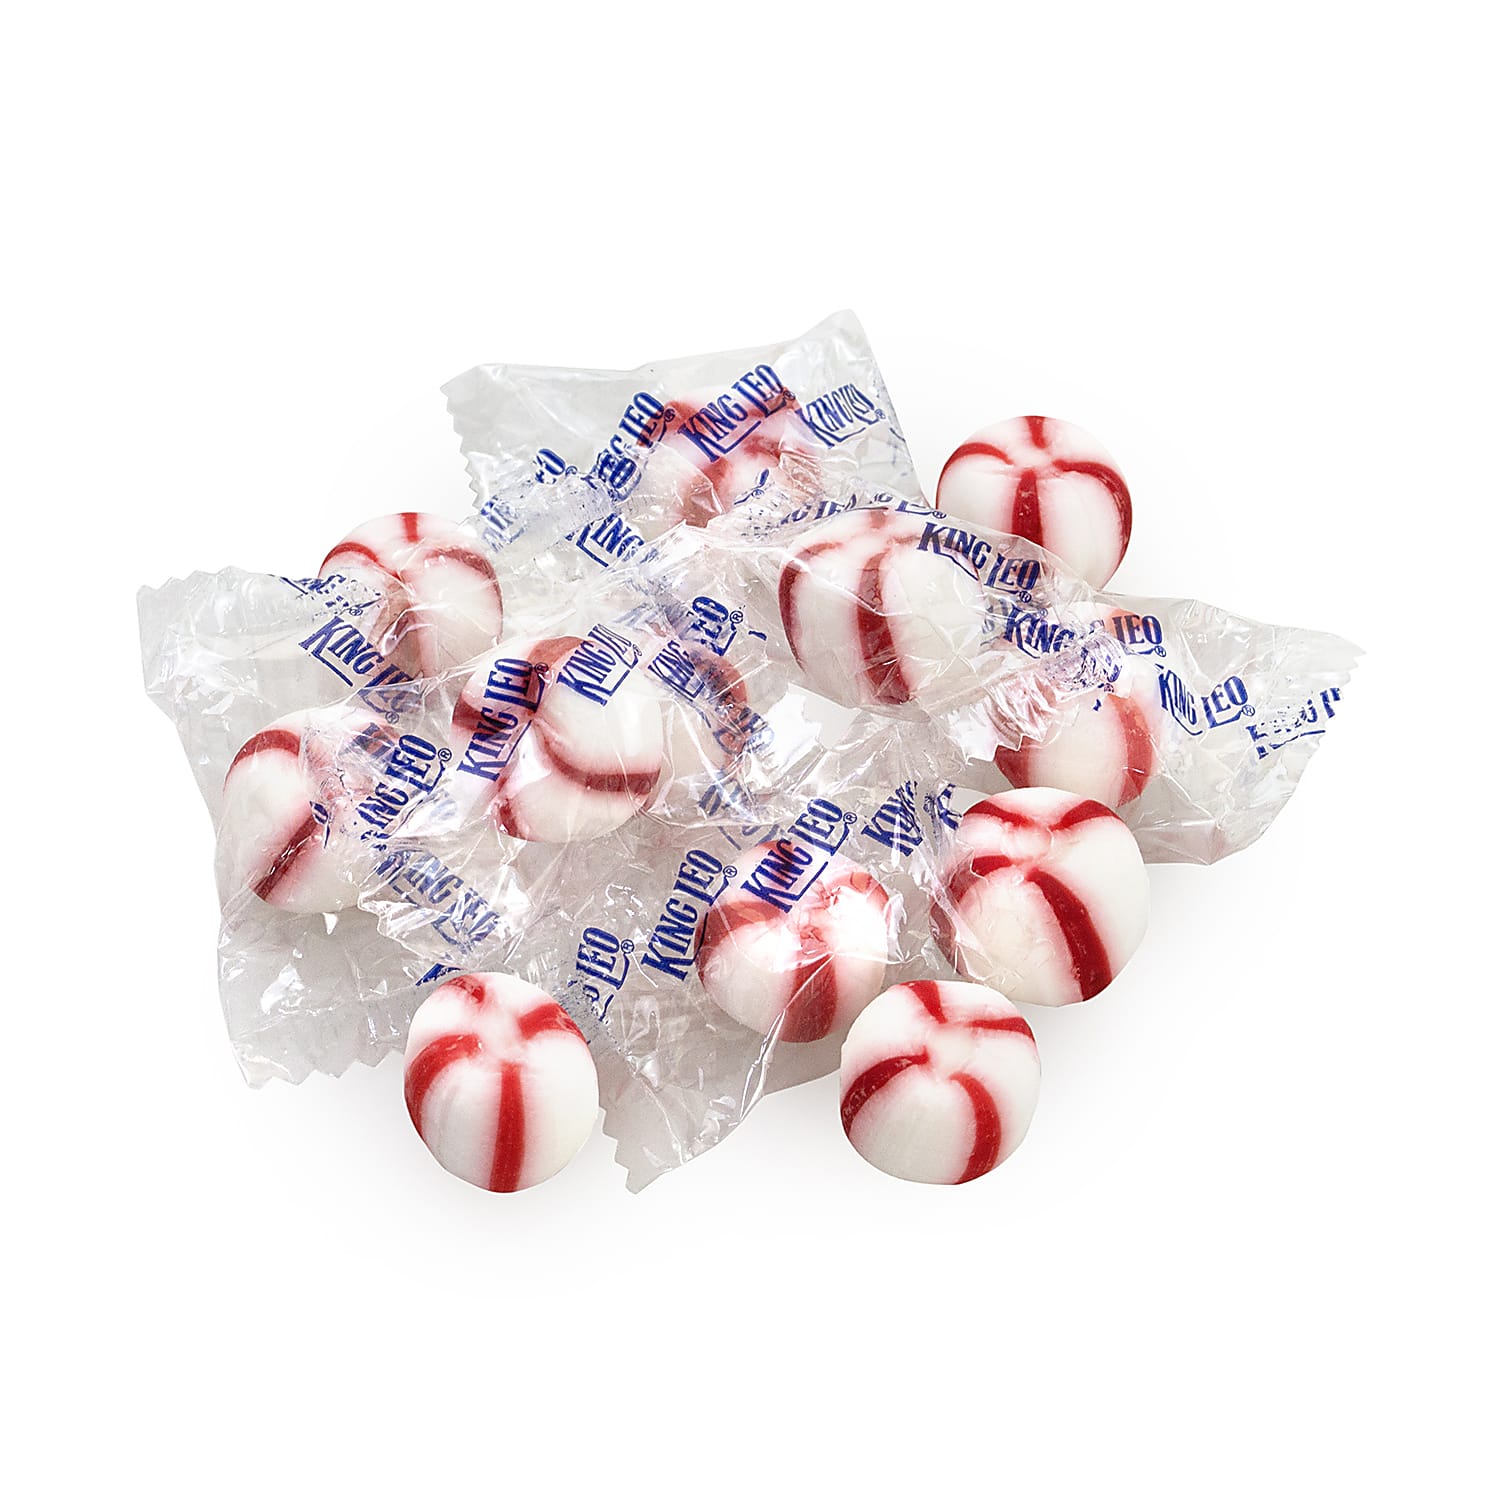 Quality Candy - Soft Peppermint Puffs - 5 lb Bag